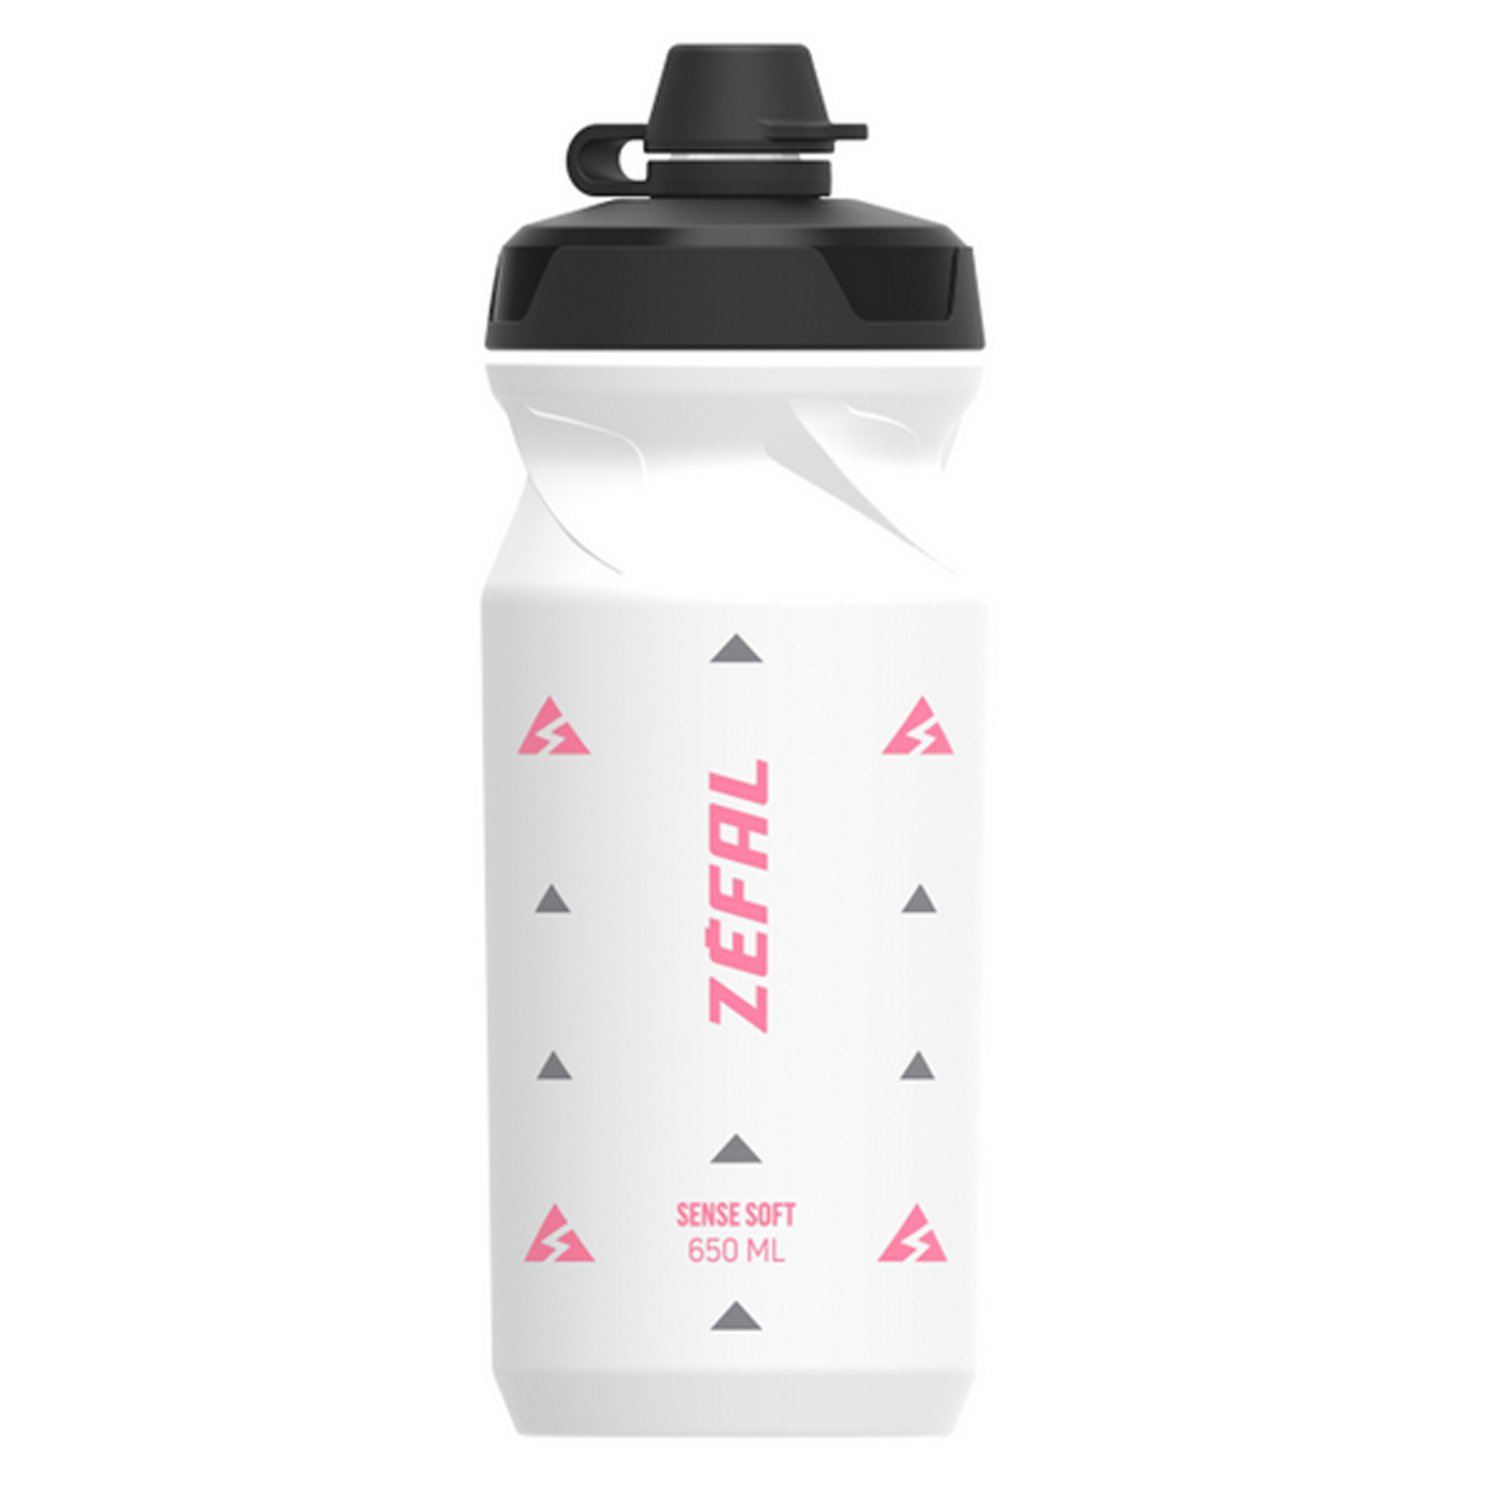 Фляга велосипедная Zefal Sense Soft 65 No-Mud Bottle, пластик, 650 мл, белый/розовый, 2023, 155R фляга велосипедная bianchi bottle tec 750ml team wh белый c9010058